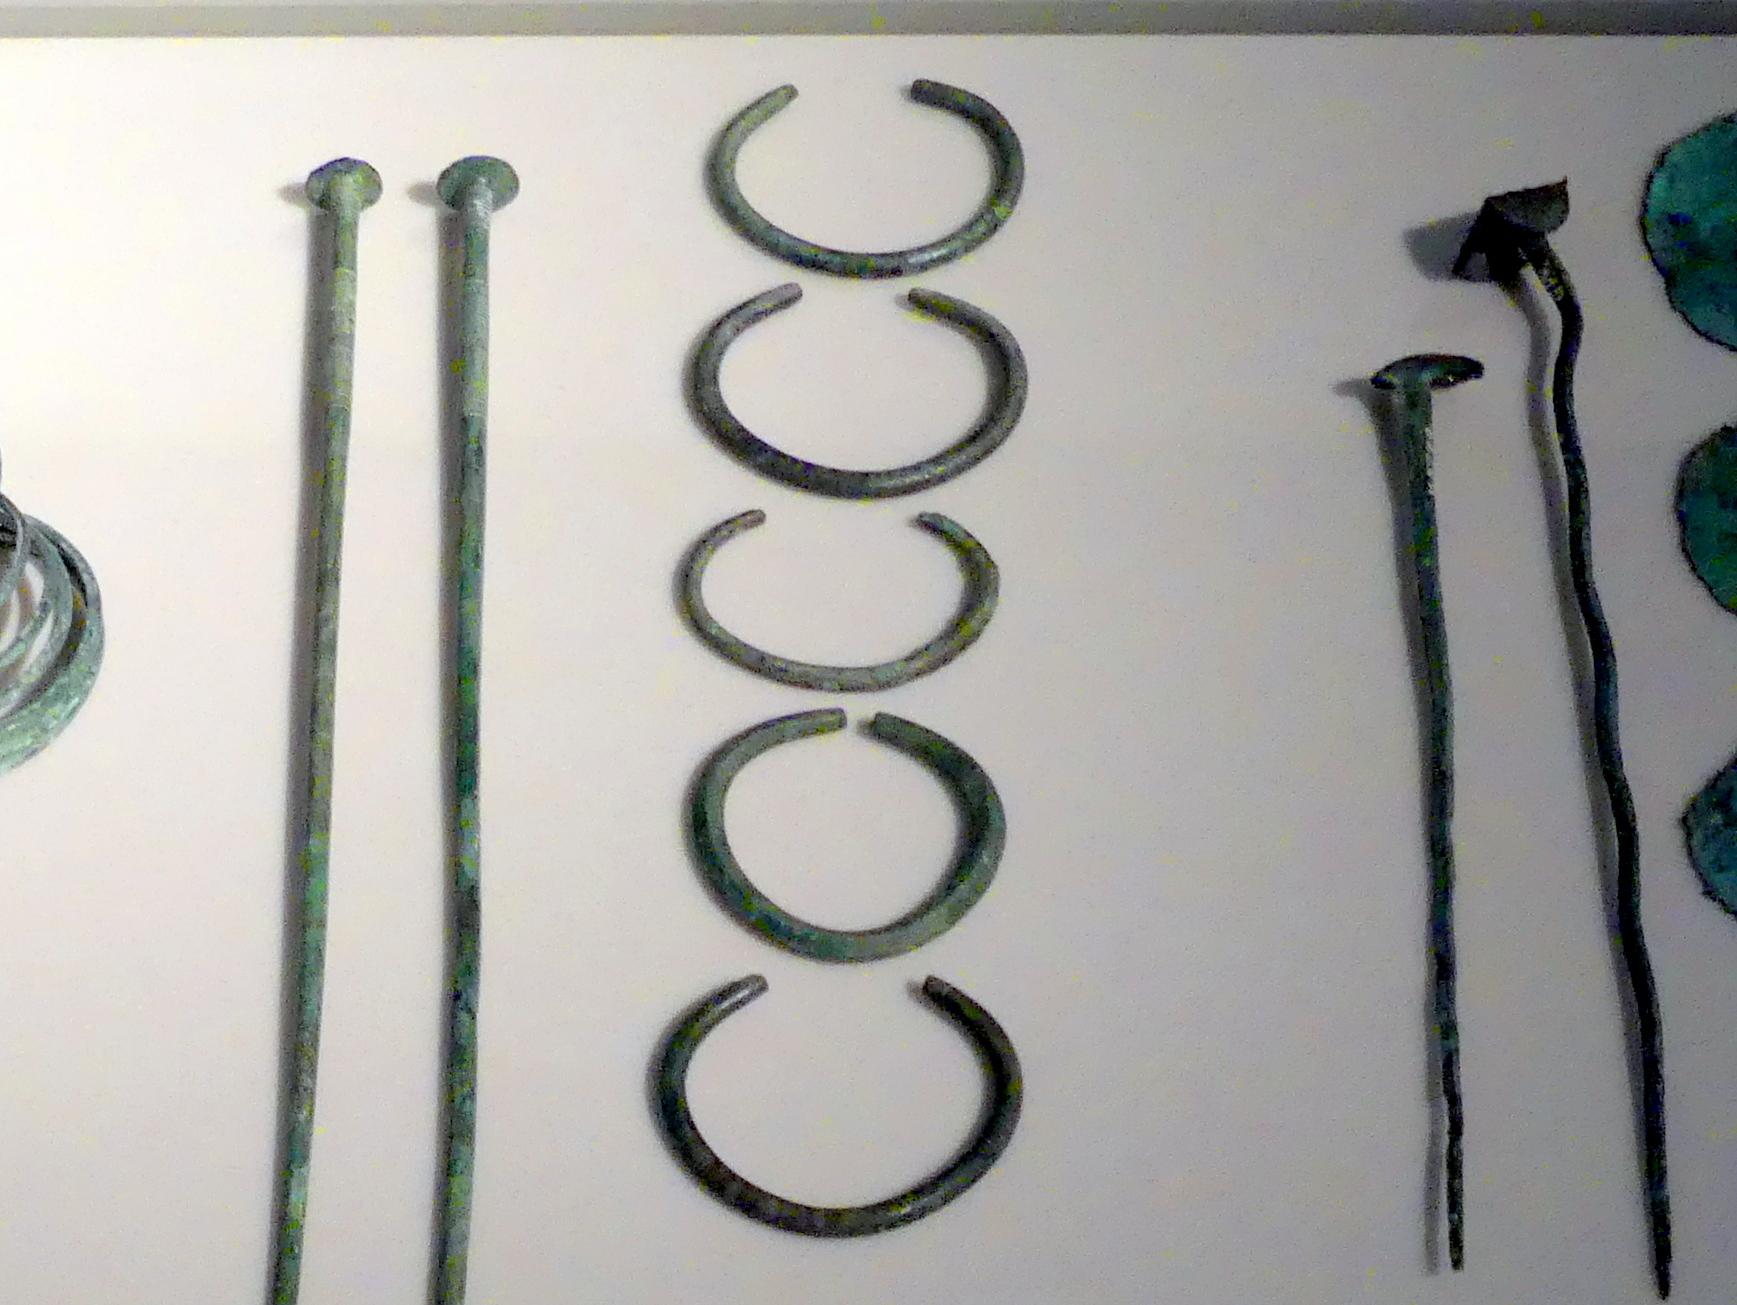 Armbänder, Mittlere Bronzezeit, 3000 - 1300 v. Chr., 1600 - 1300 v. Chr., Bild 1/2